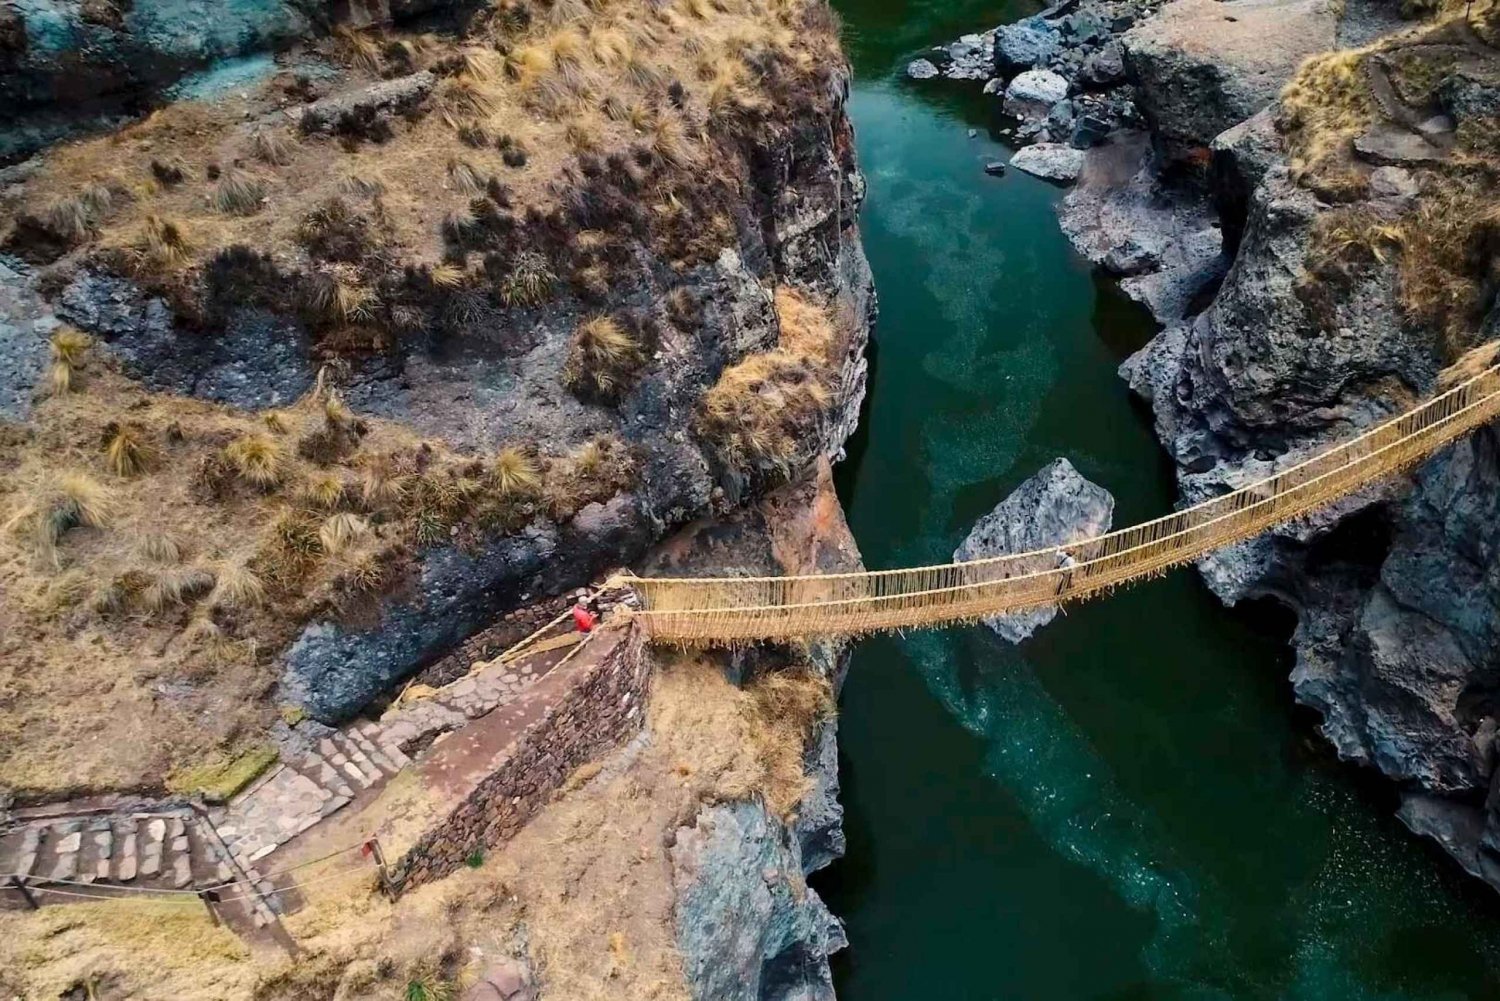 Queswachaka : Tour Inca bridge